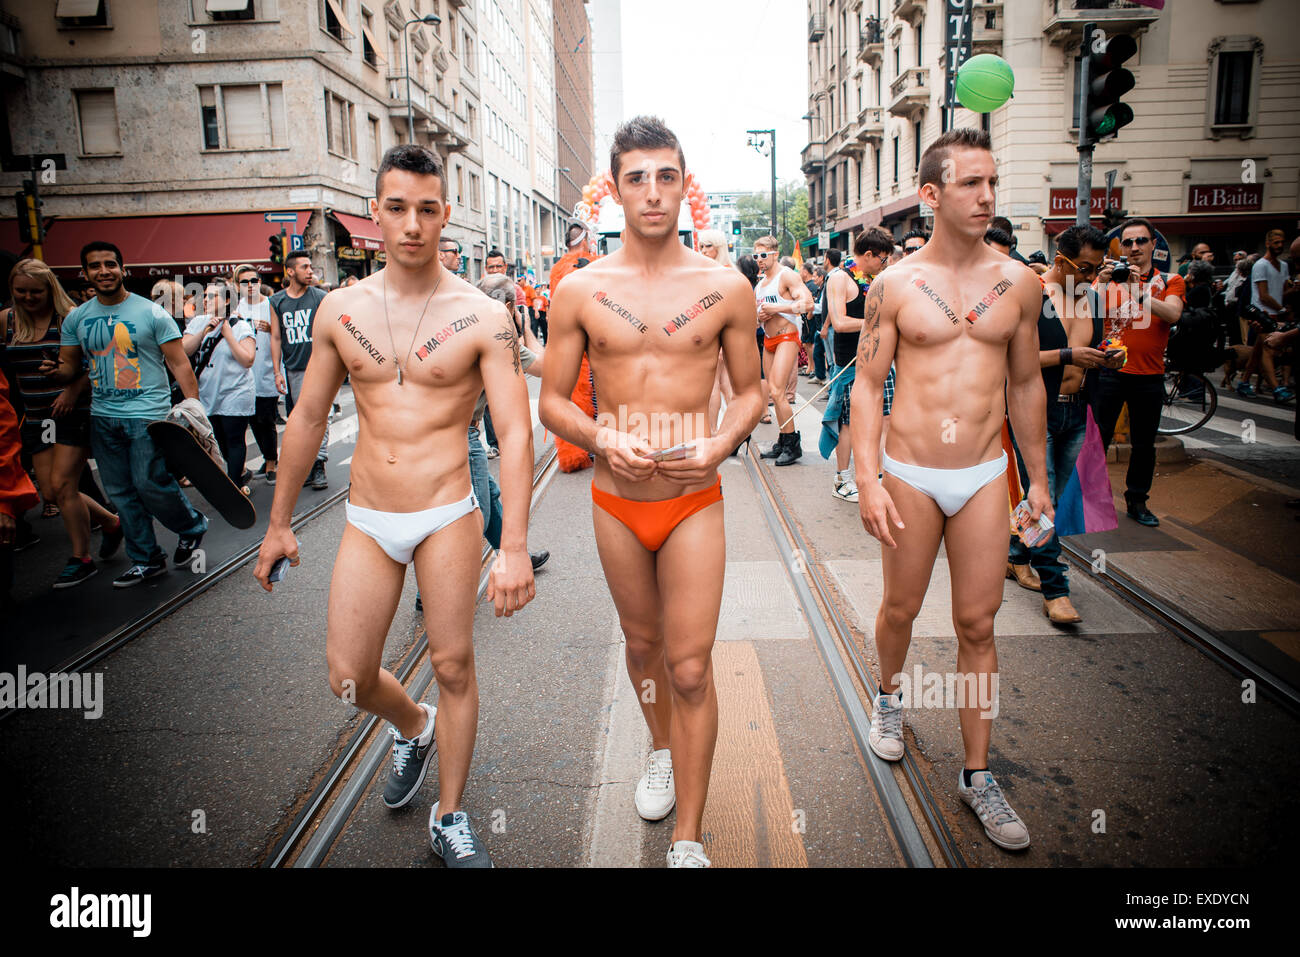 встреча геев на улице фото 69